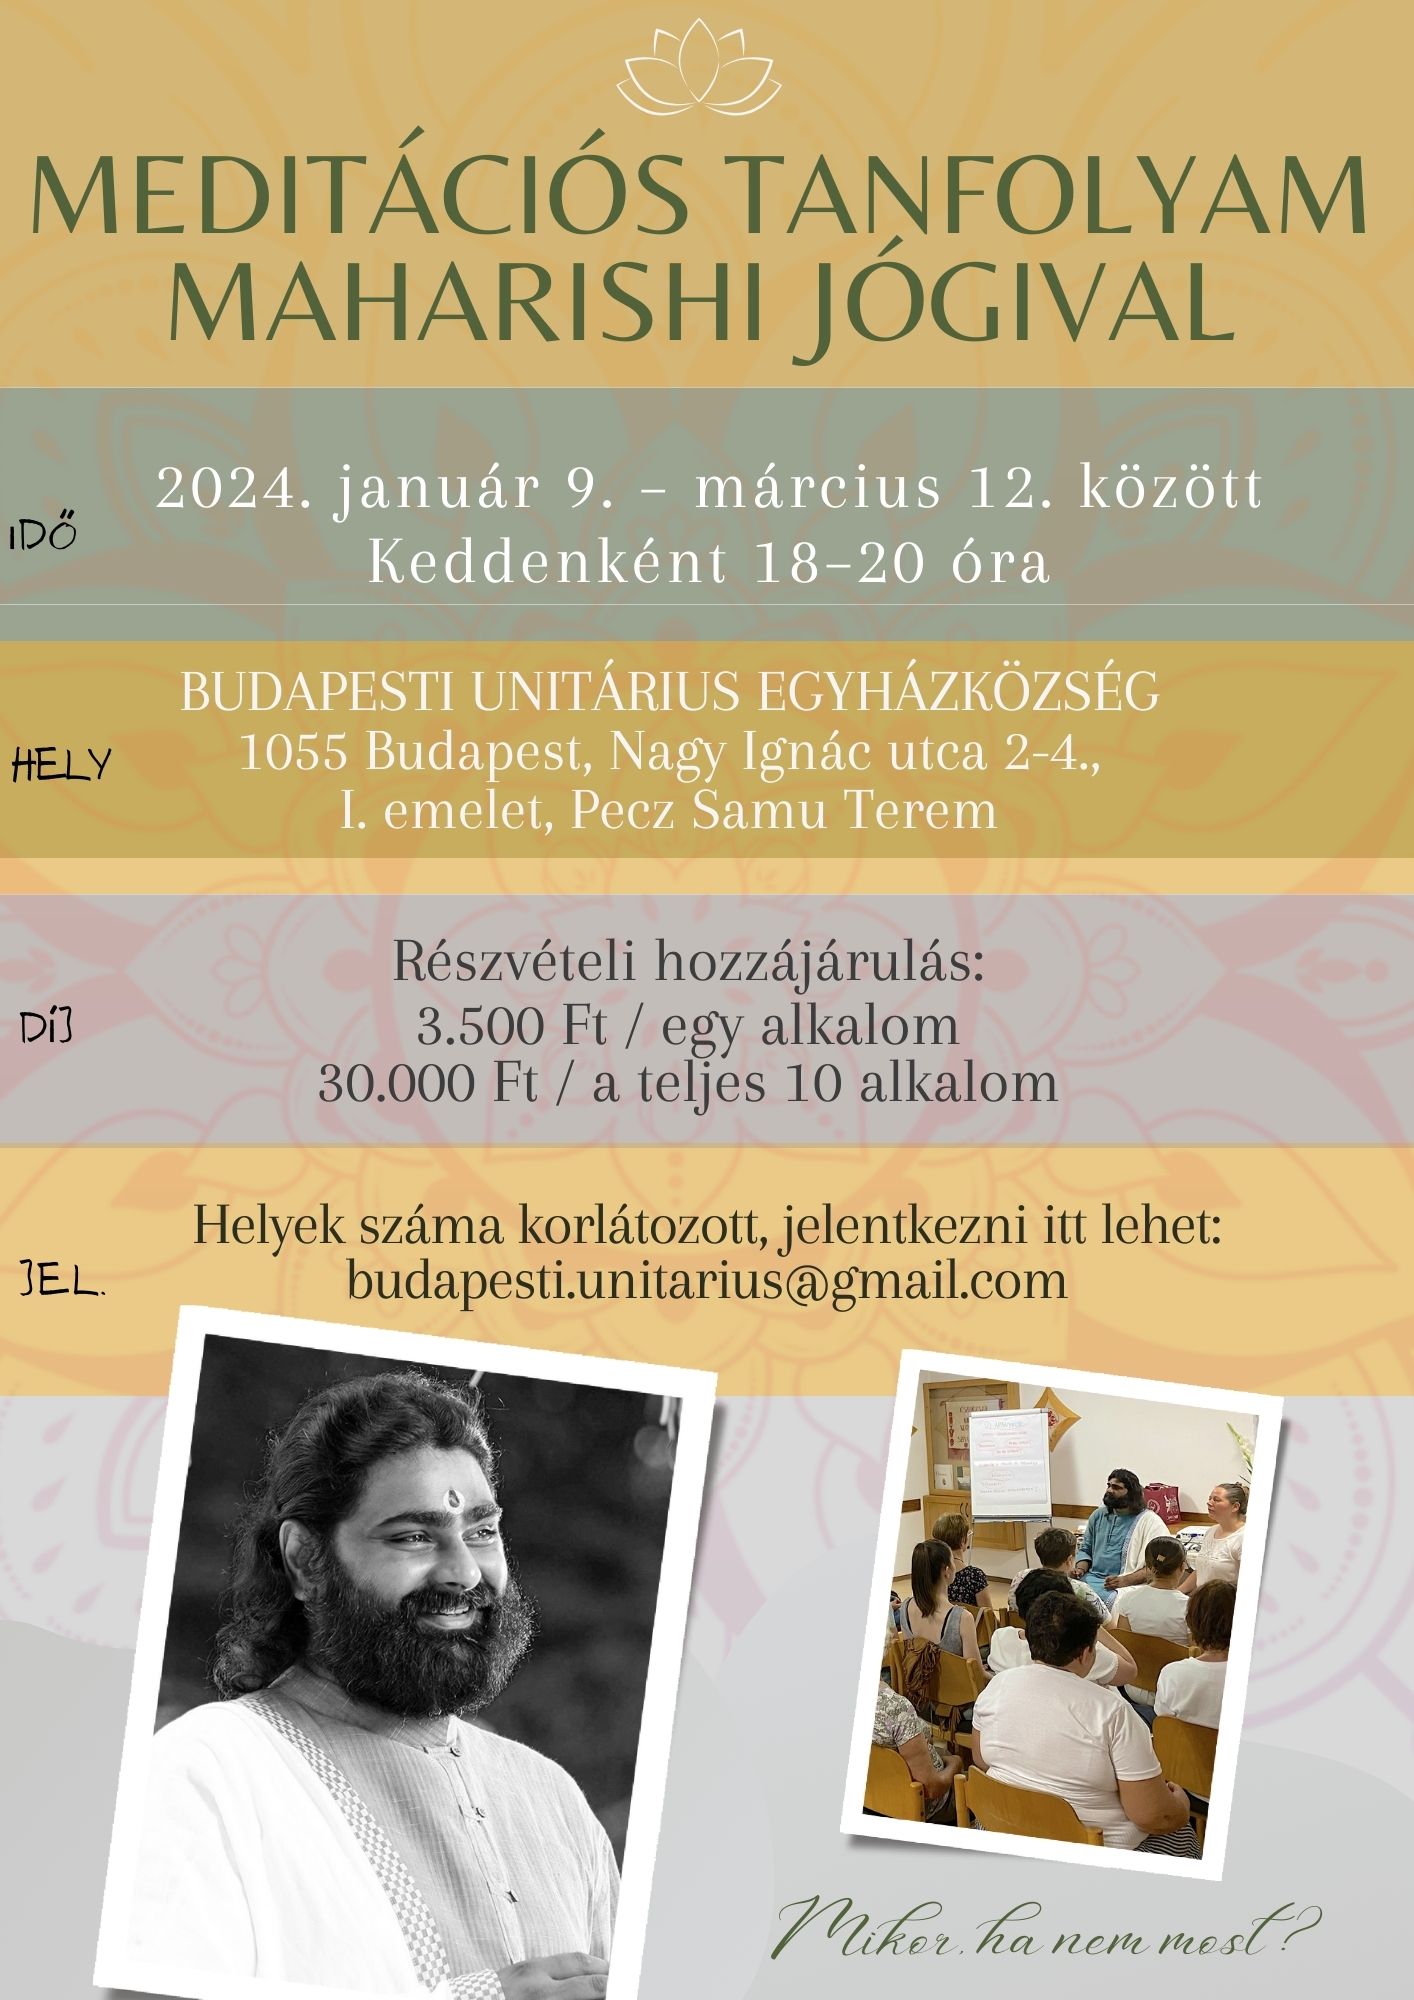 Meditációs tanfolyam Maharishi Jogival